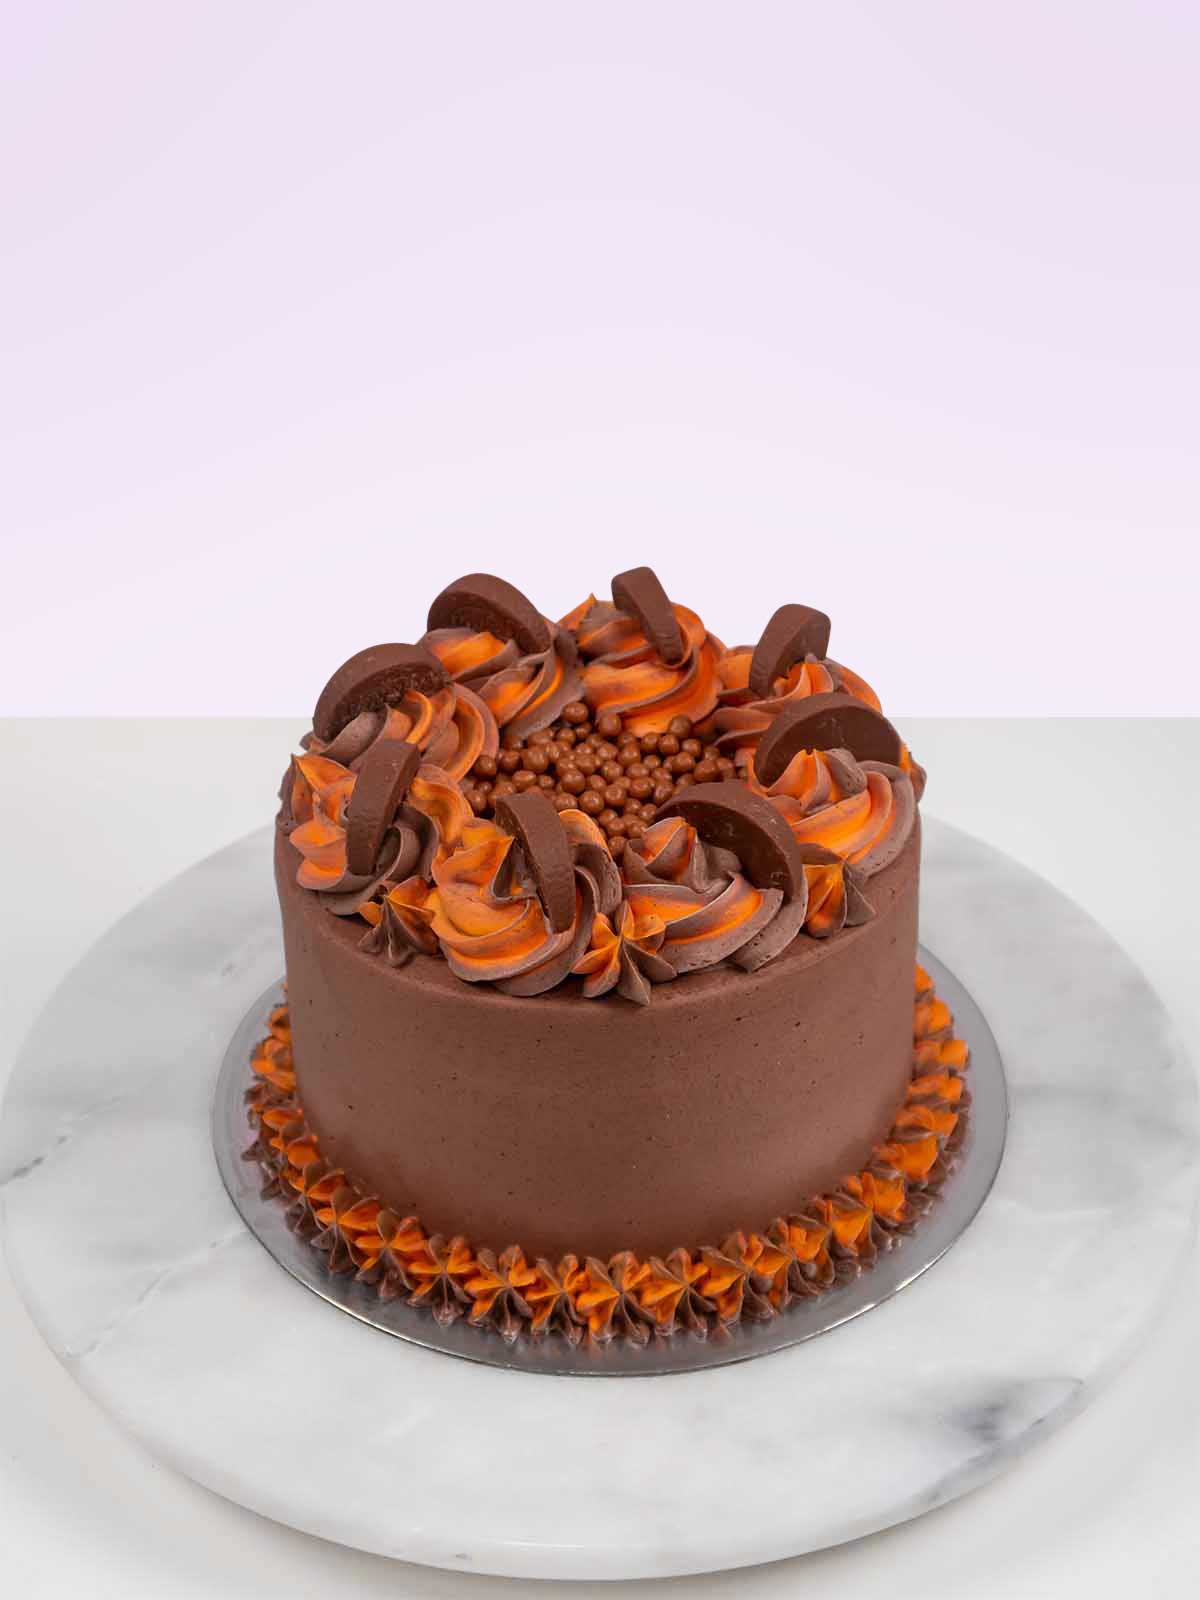 Chocolate Orange Cake to Buy